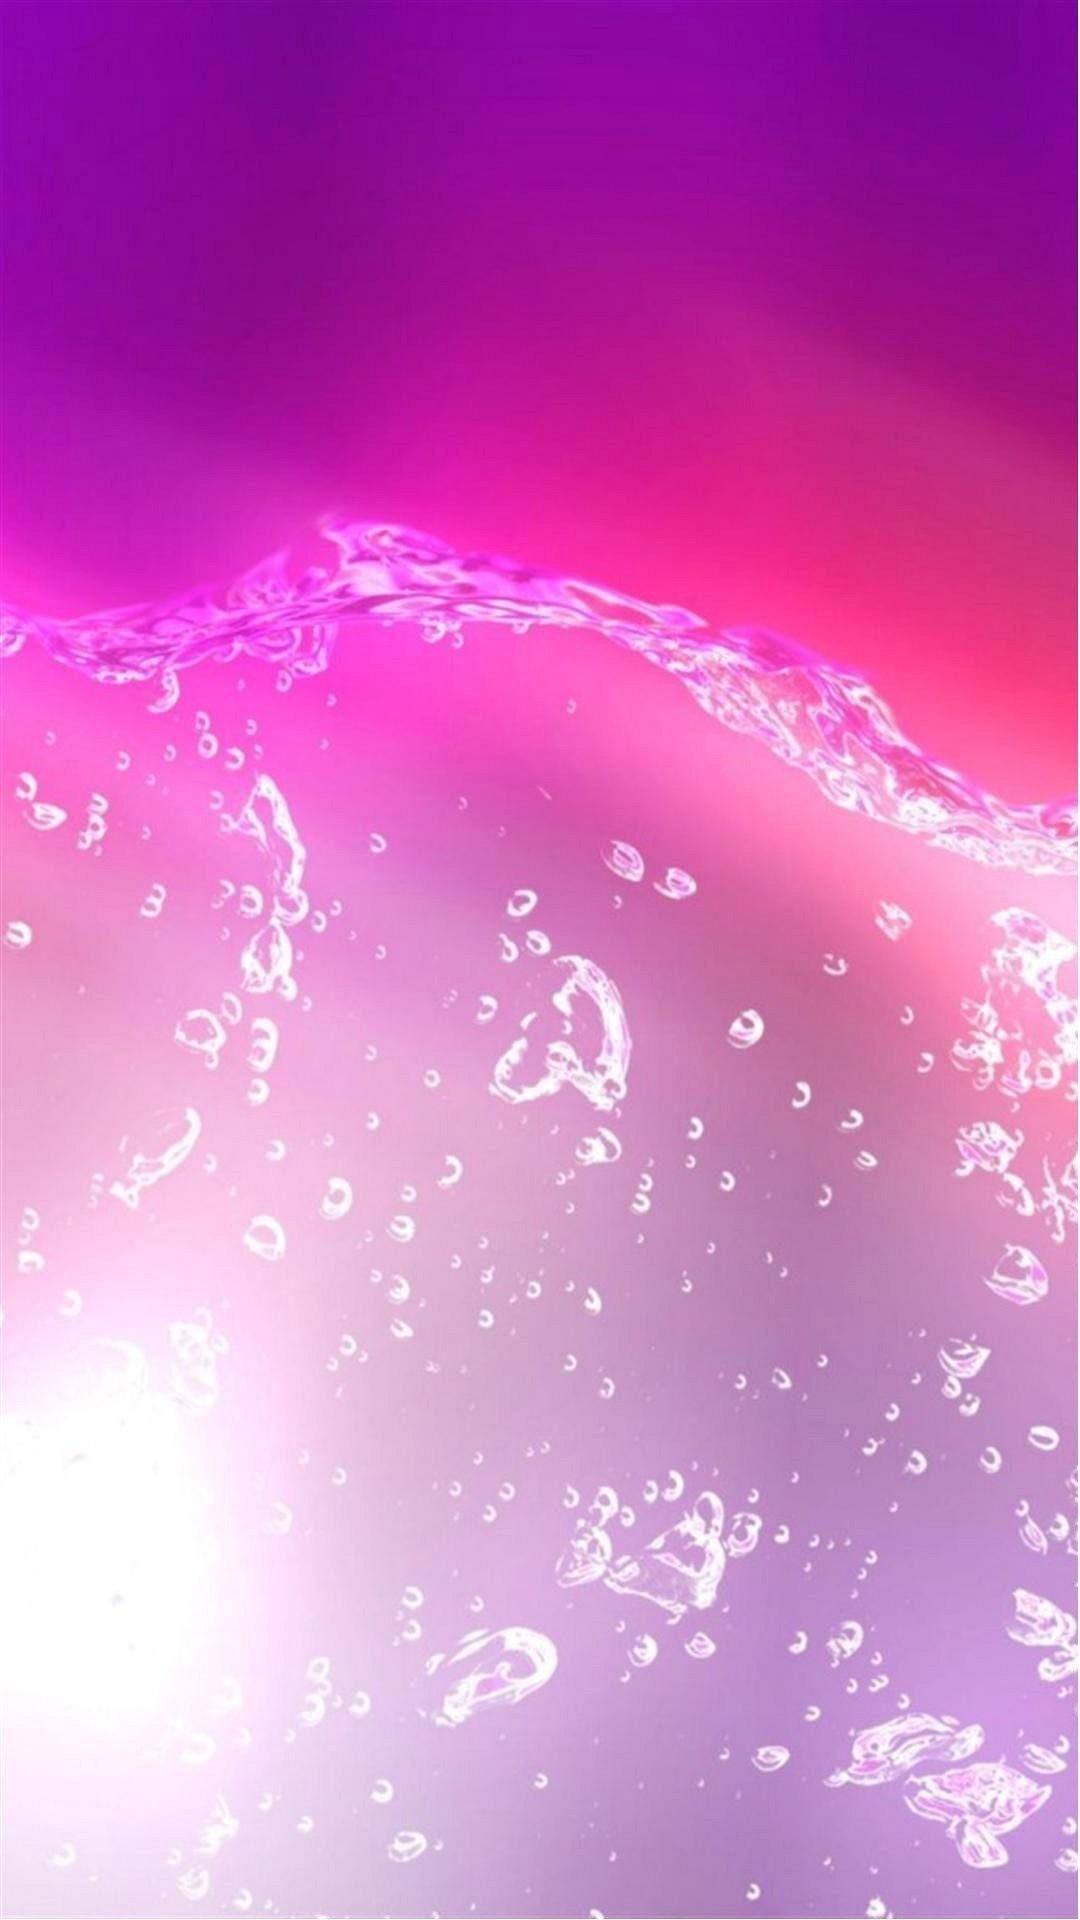 1080x1920 Galaxy S5 Pink Water Wallpaper Download Free - TimeDoll | iPhone7, ã¹ããå£ç´/å¾